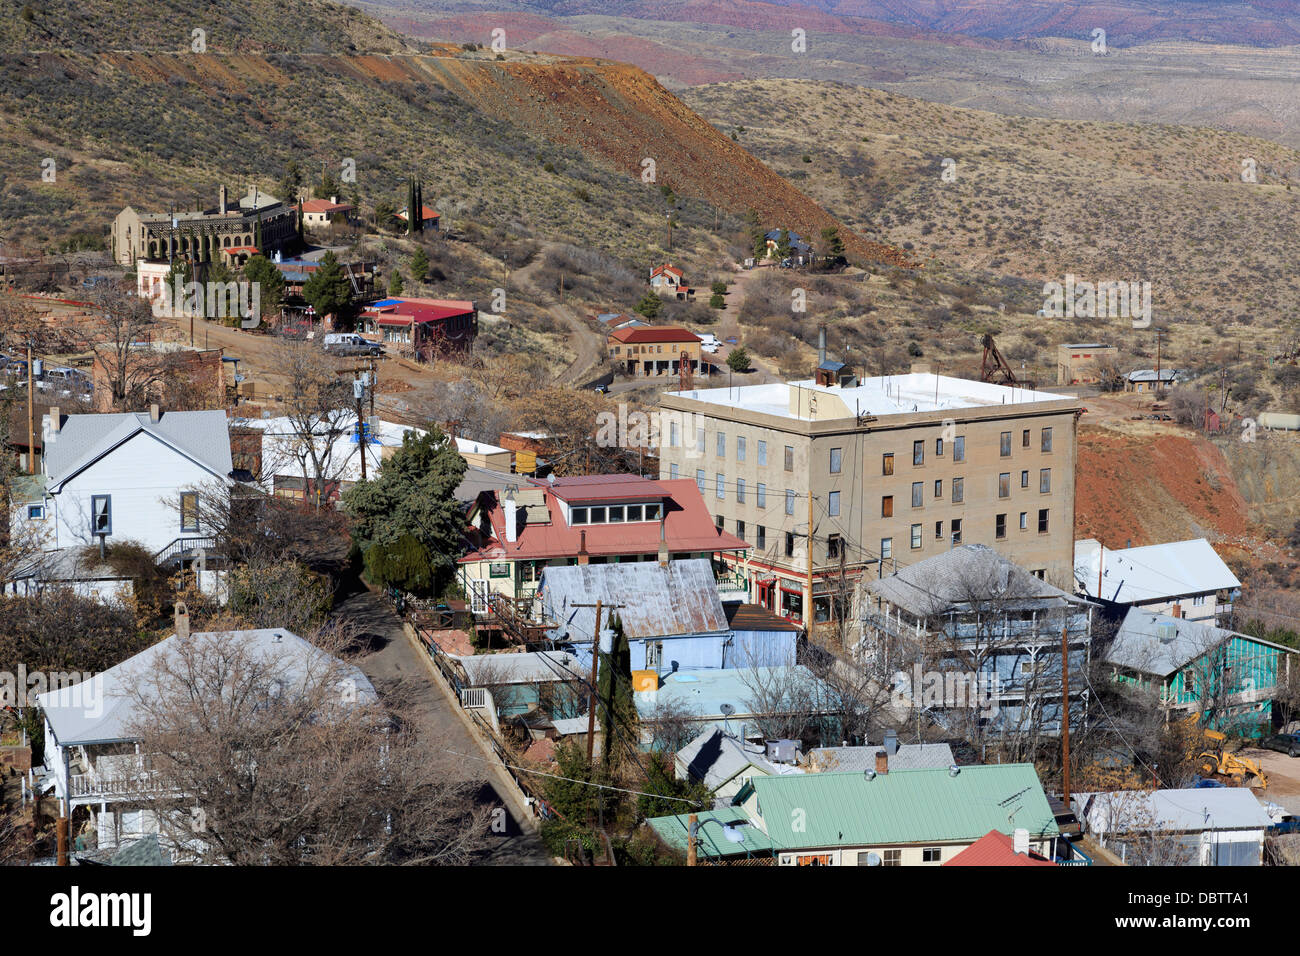 Jerome Mining Town, Arizona, United States of America, North America Stock Photo